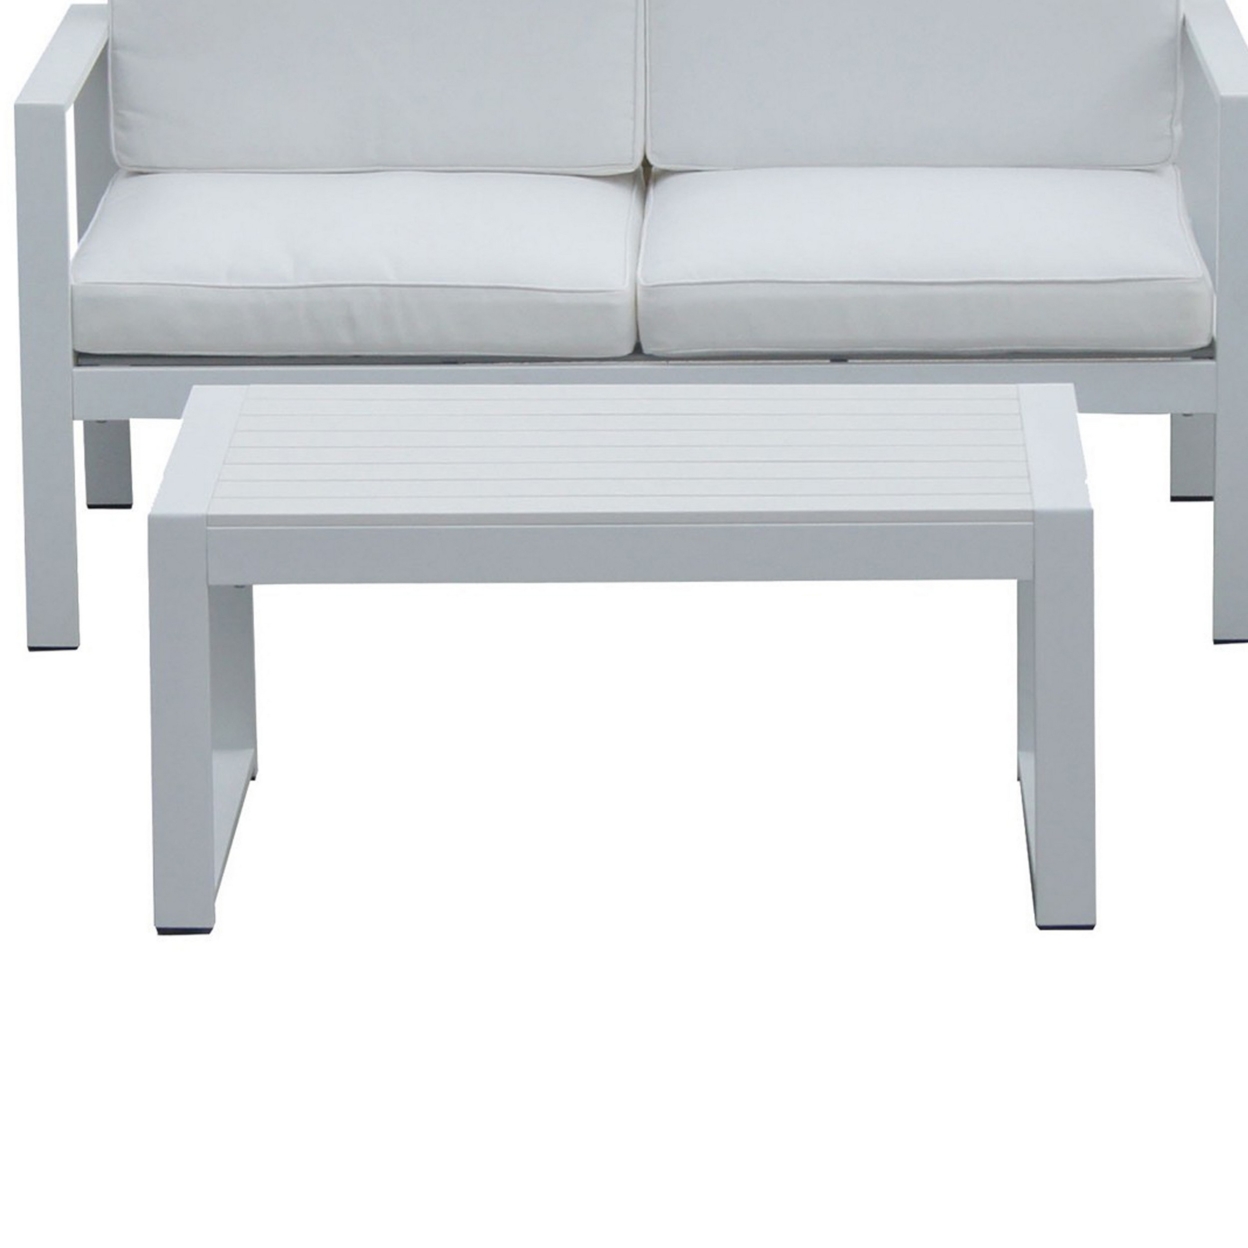 Kili 4 Piece Outdoor Sofa, Chairs, And Table Set, Crisp White Aluminum- Saltoro Sherpi